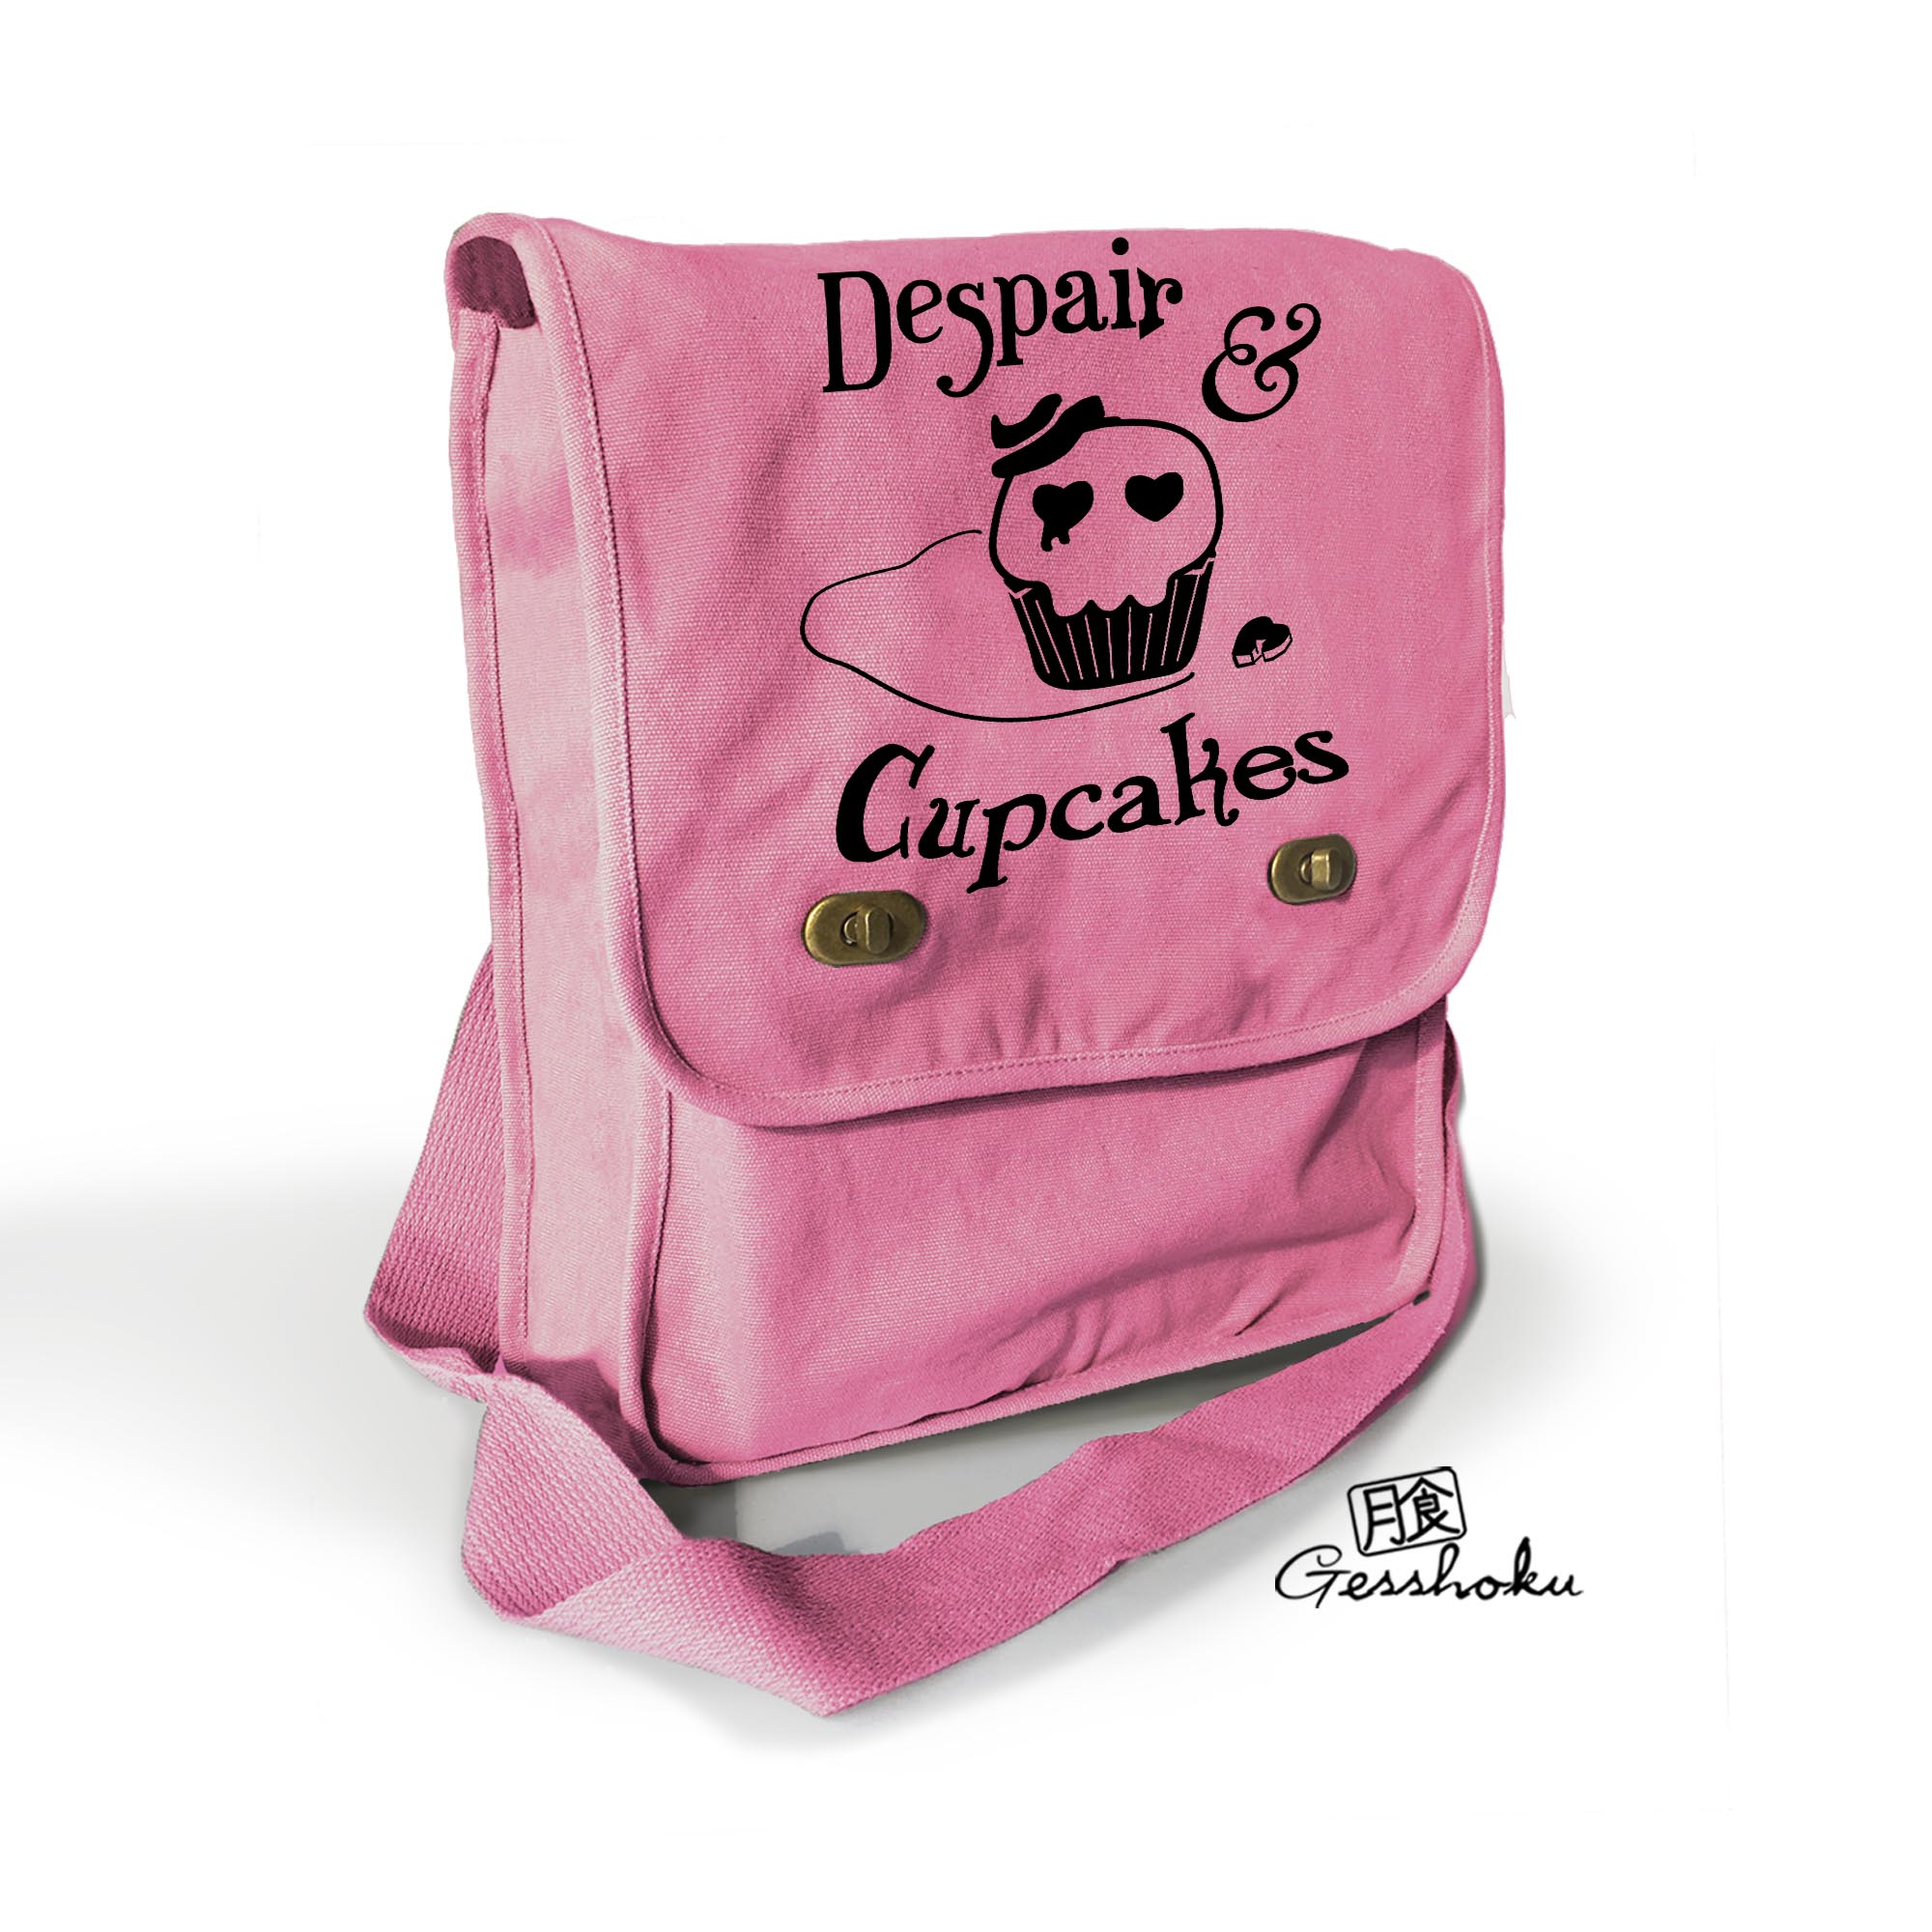 Despair and Cupcakes Field Bag - Pink